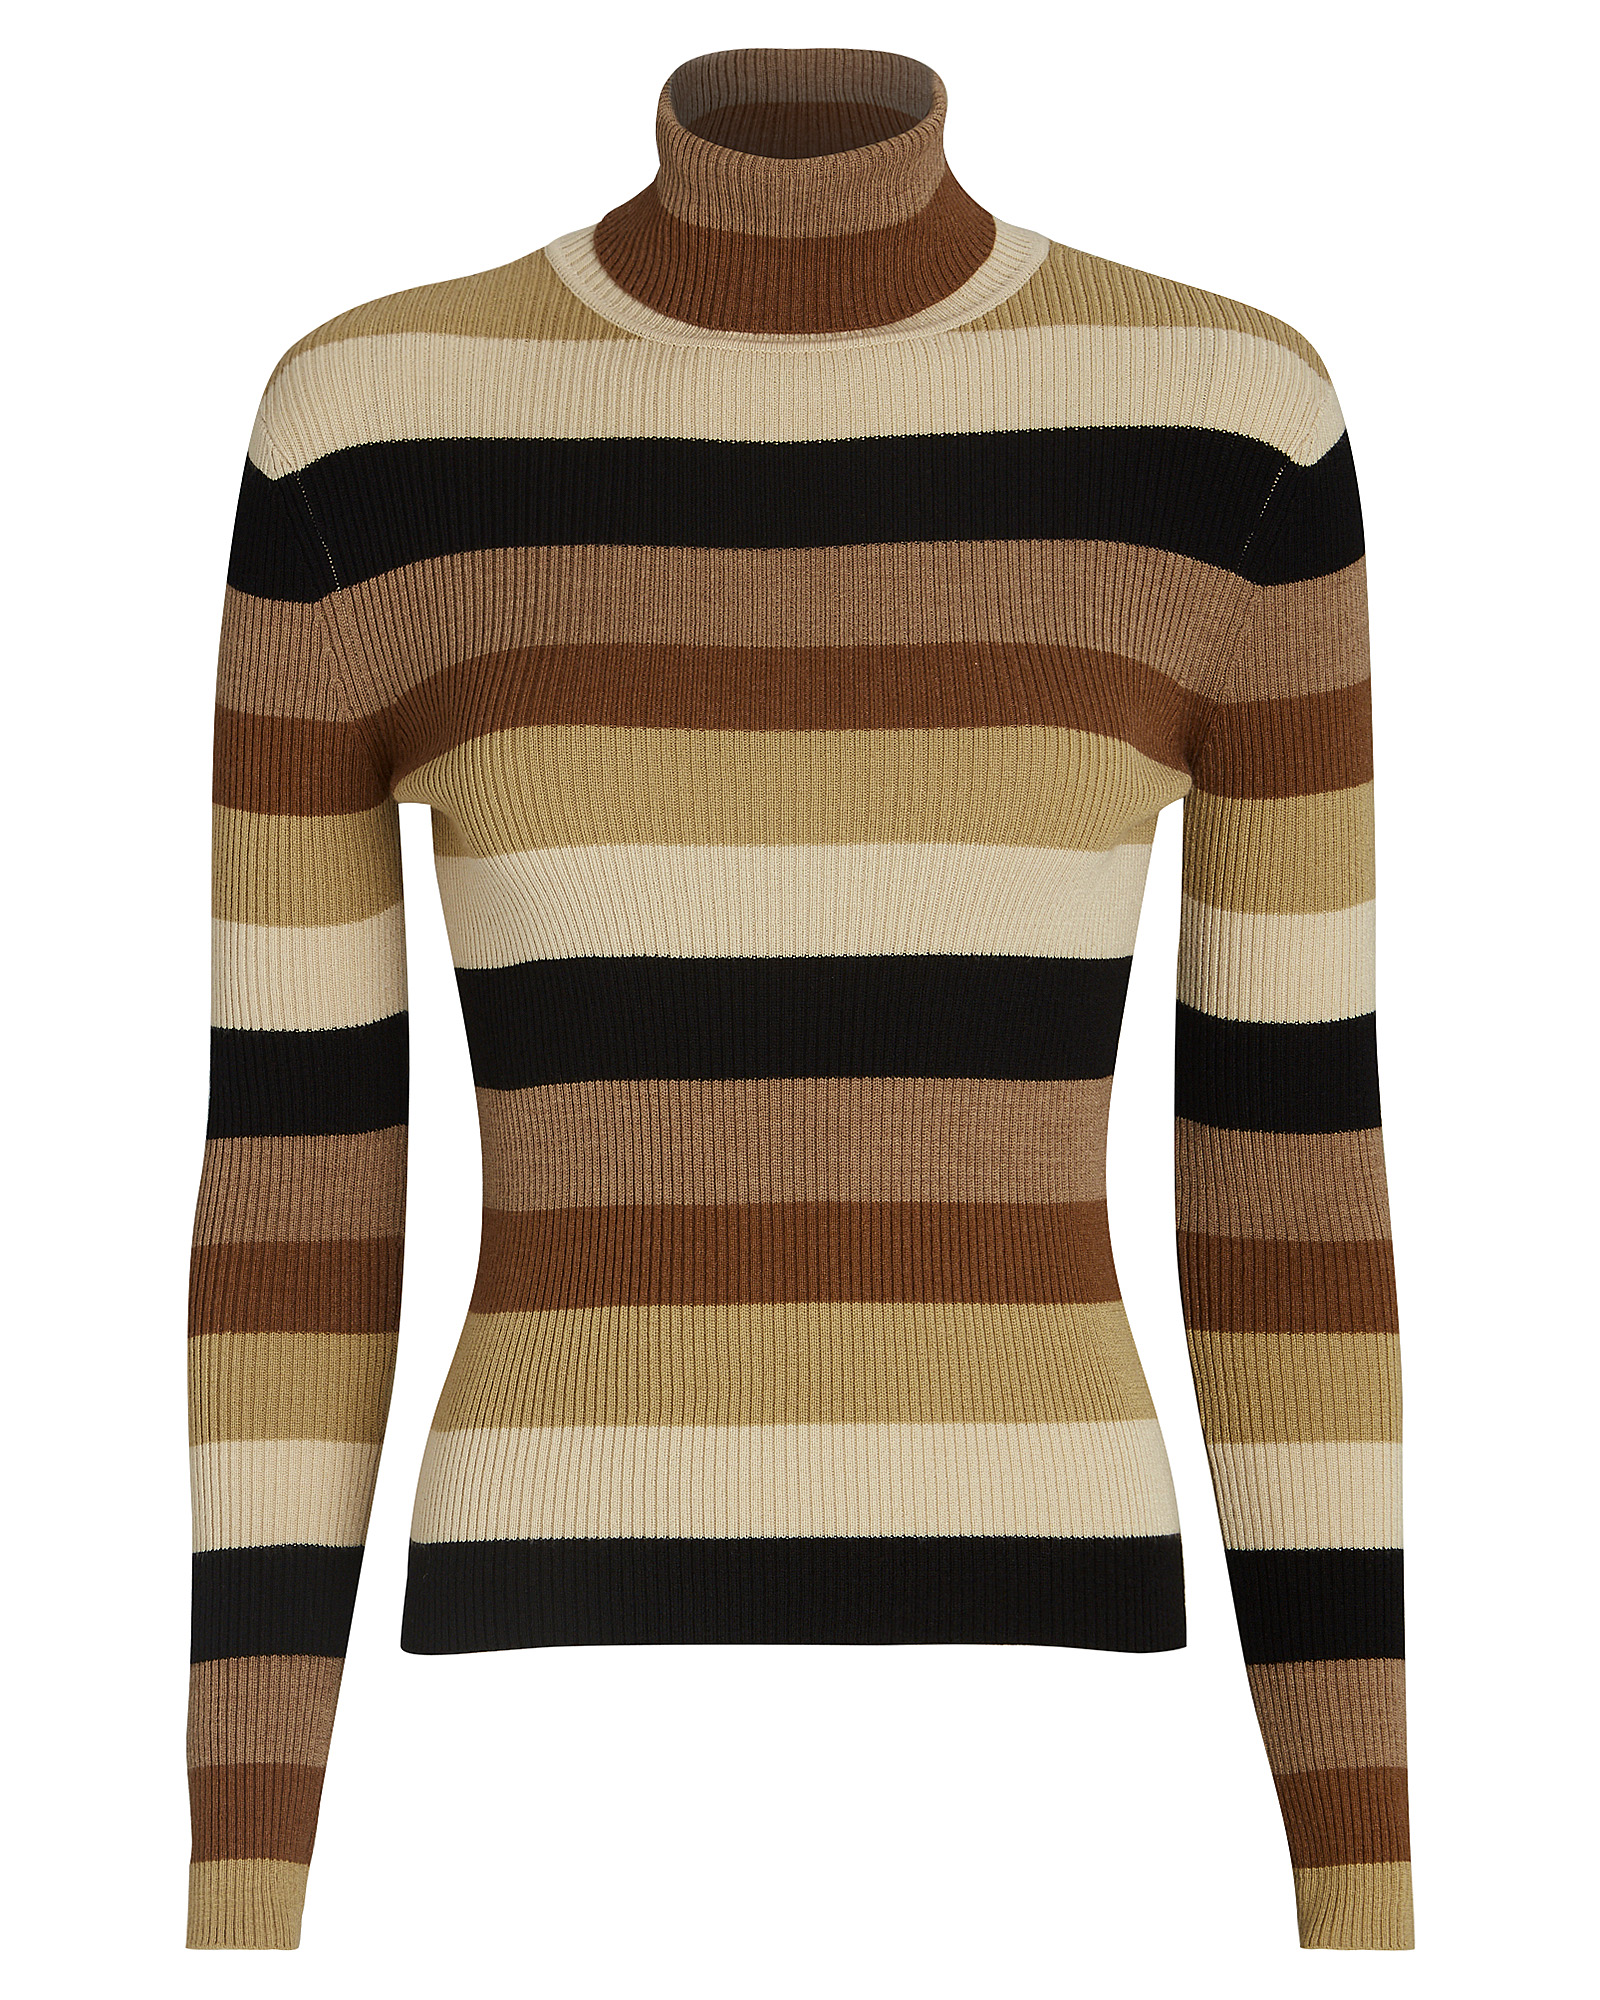 STAUD Ken Striped Sweater | INTERMIX®